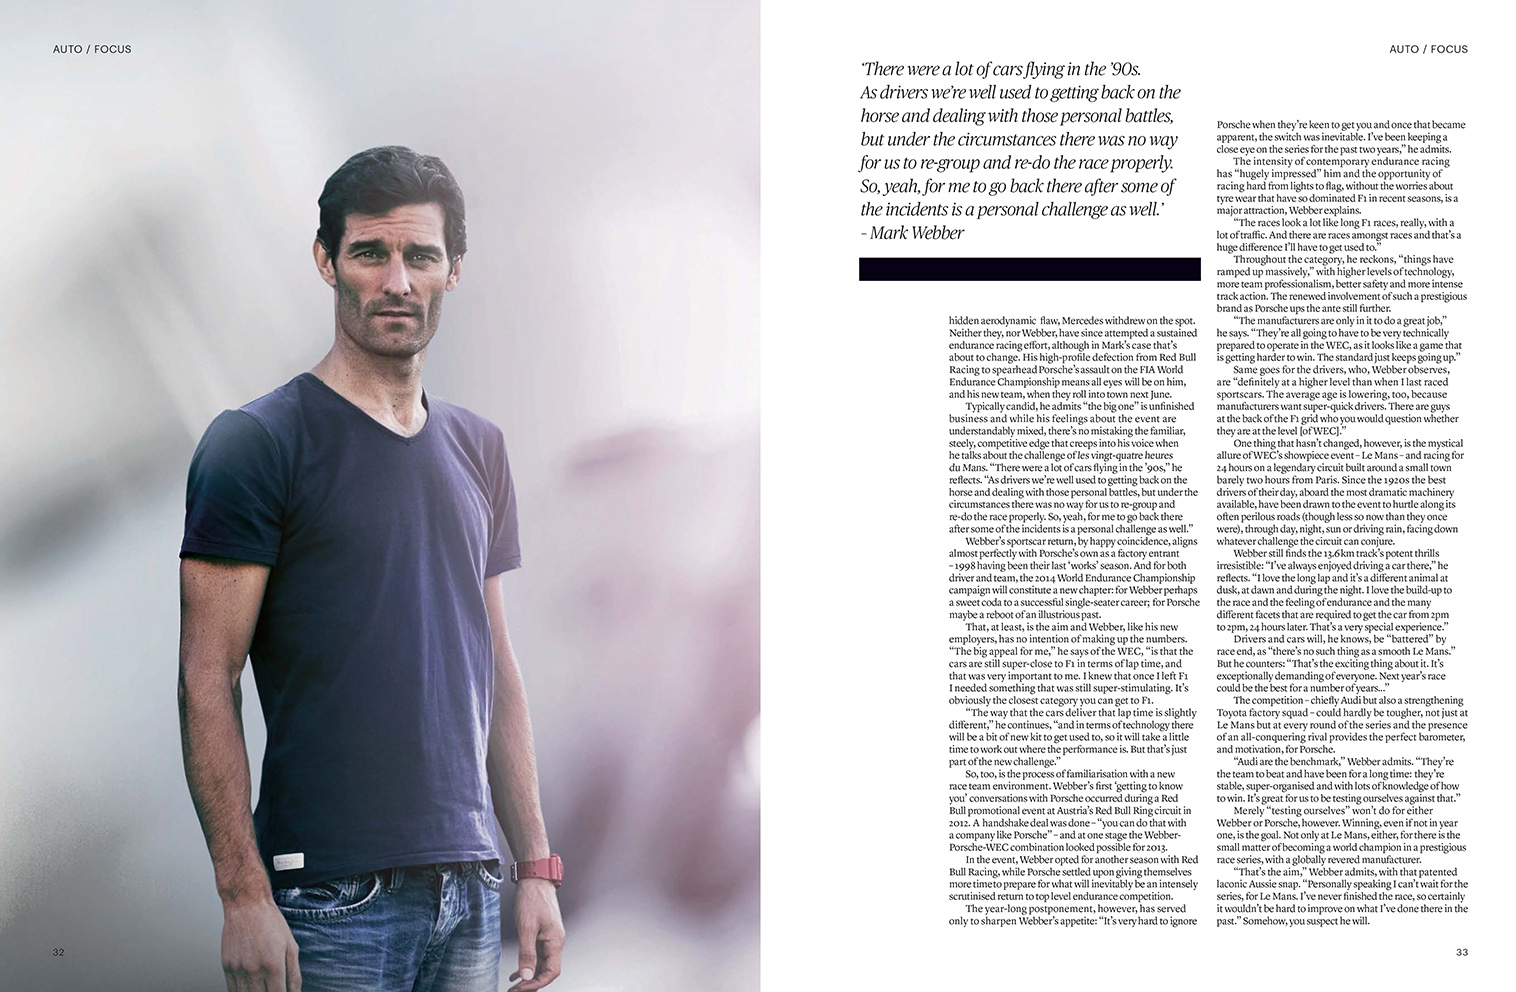 Australian racing driver Mark Webber feature in AUTO the FIA Magazine